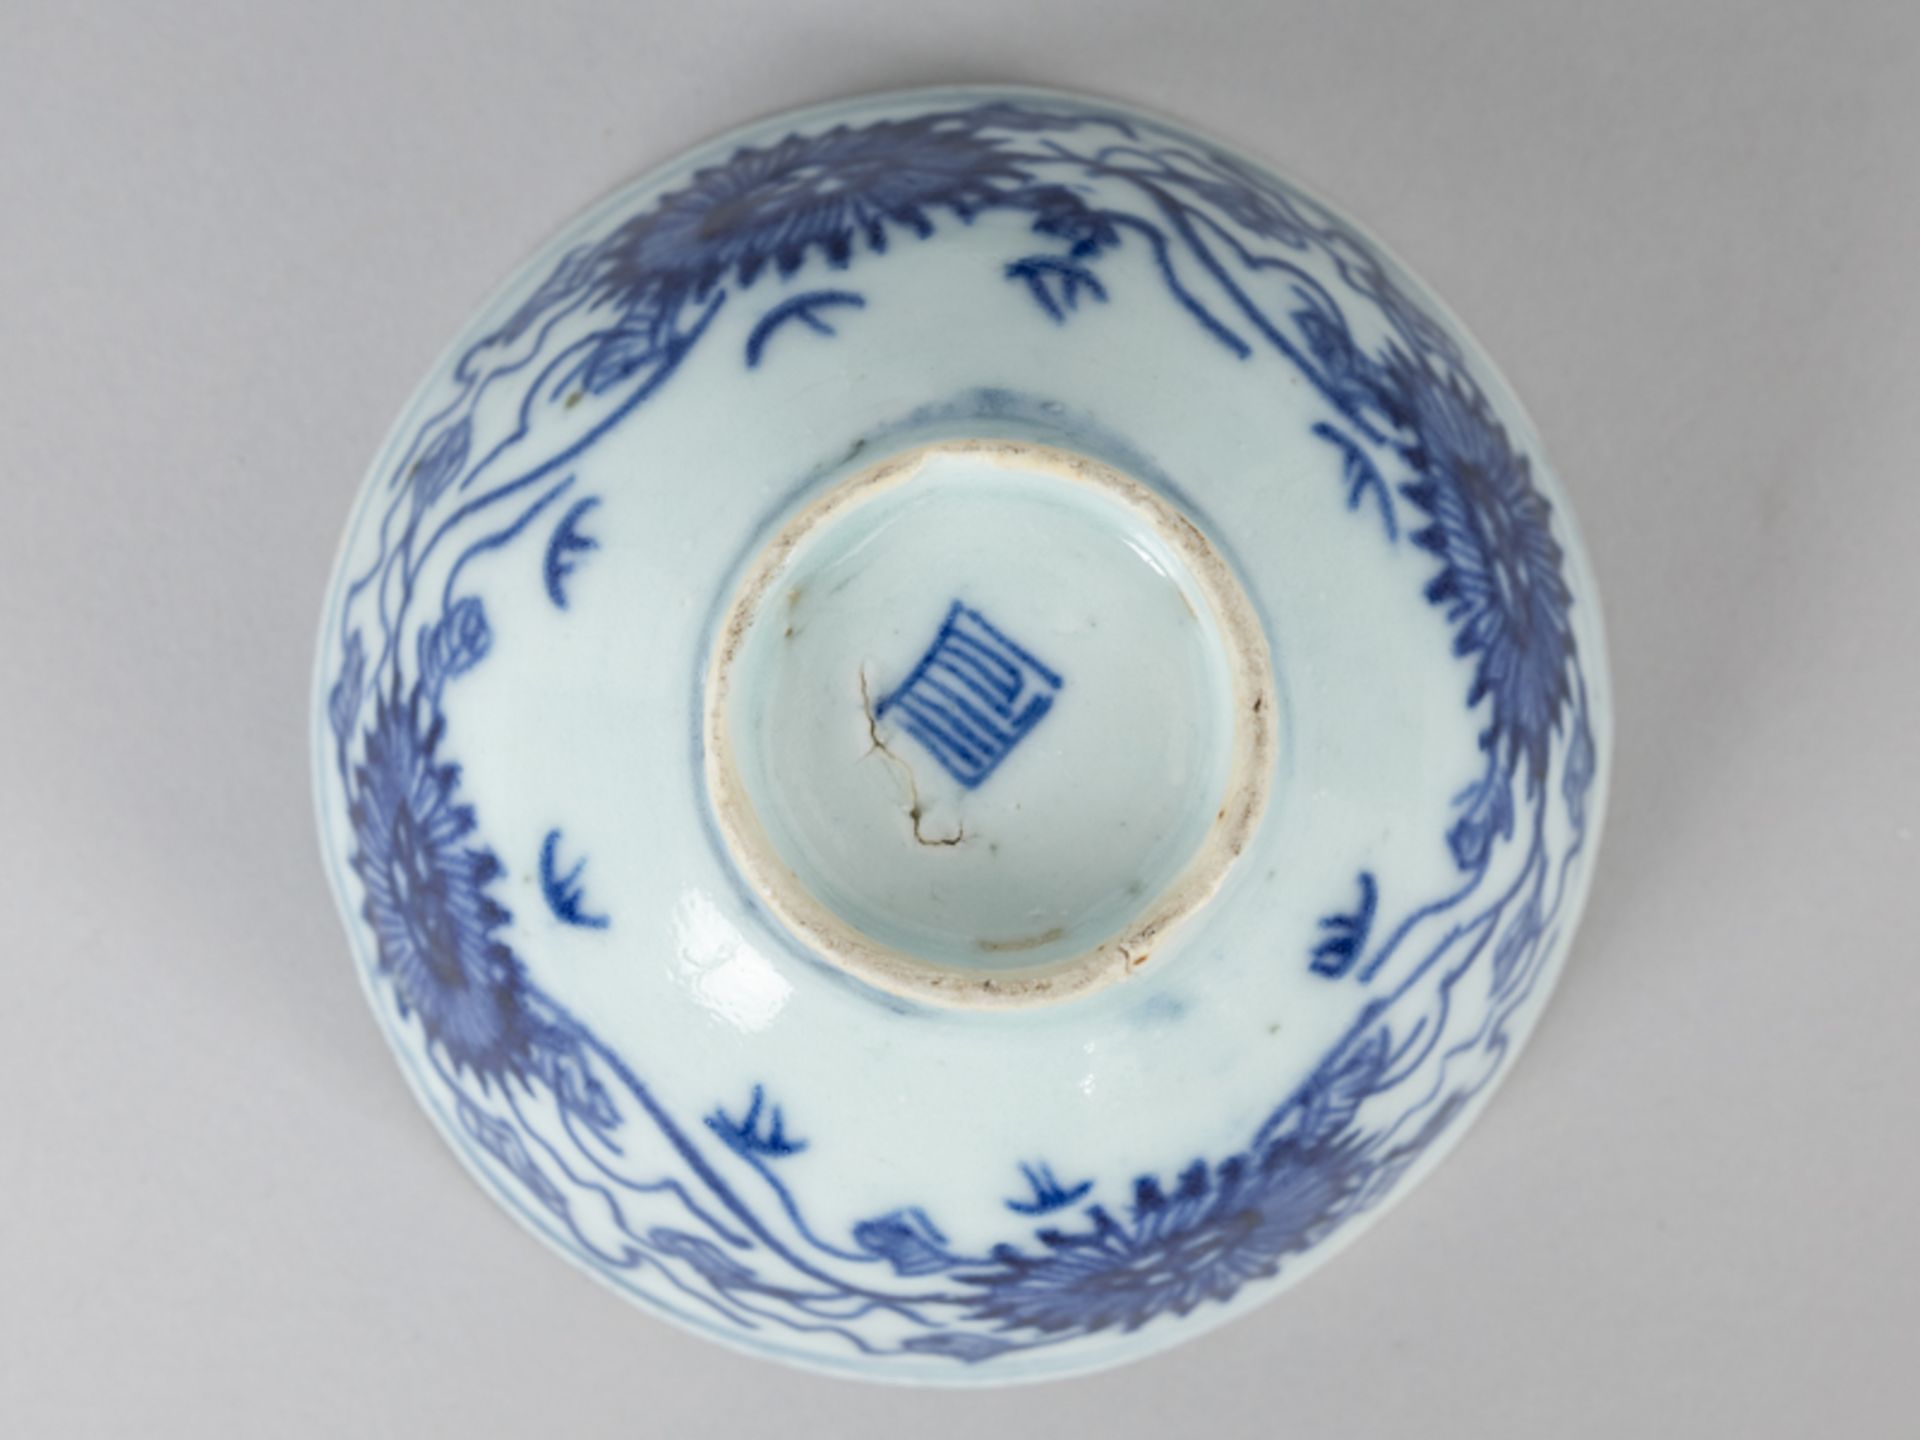 Kleine Schale / Kumme / Teeschale, China, wohl Qing-Dynastie, 18. Jh. - Image 4 of 6